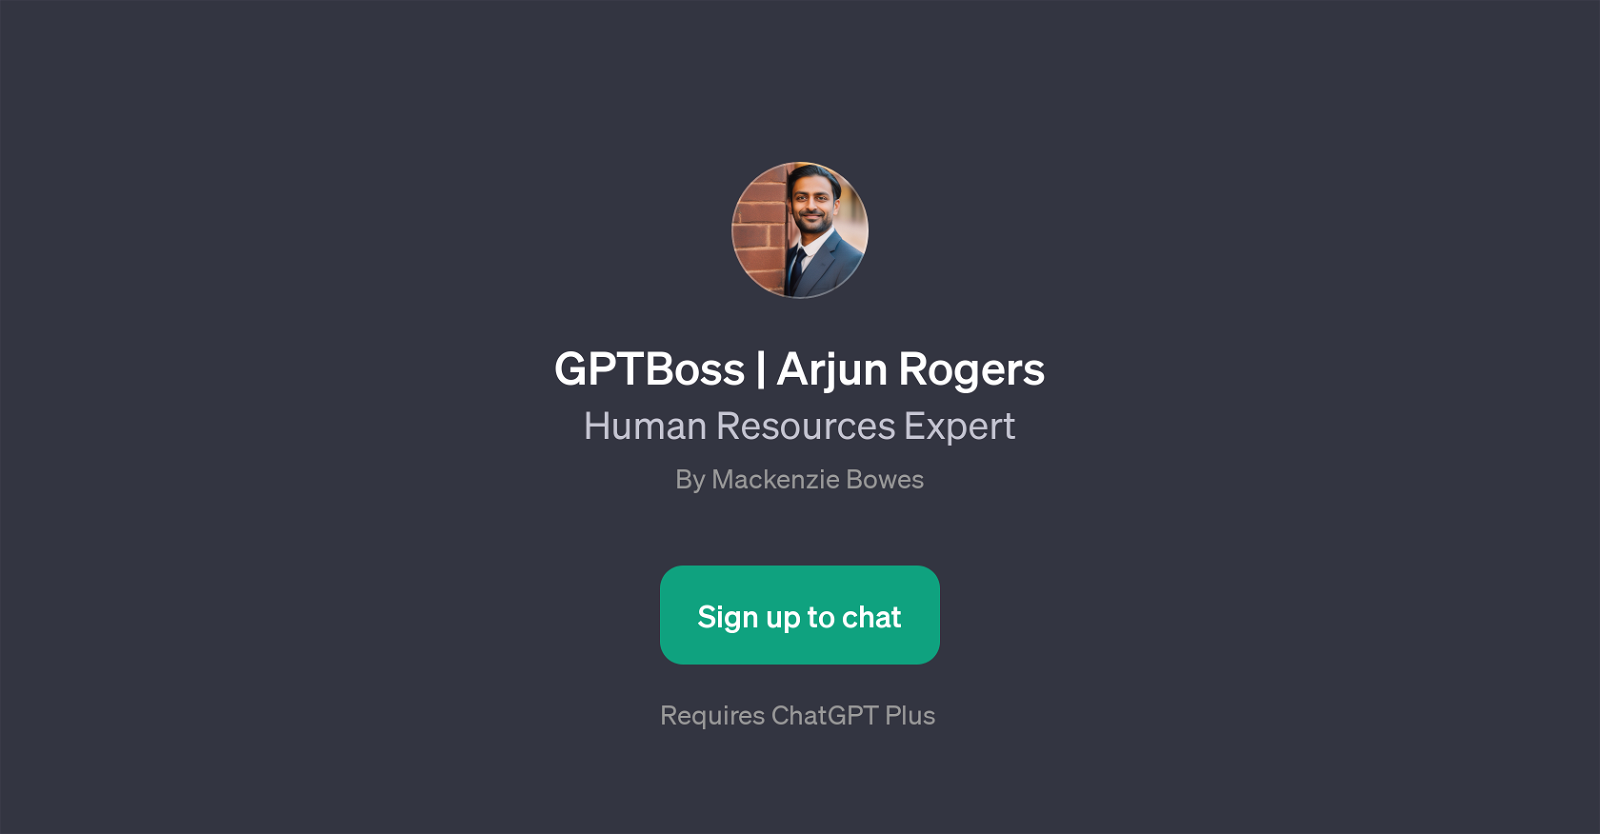 GPTBoss | Arjun Rogers website